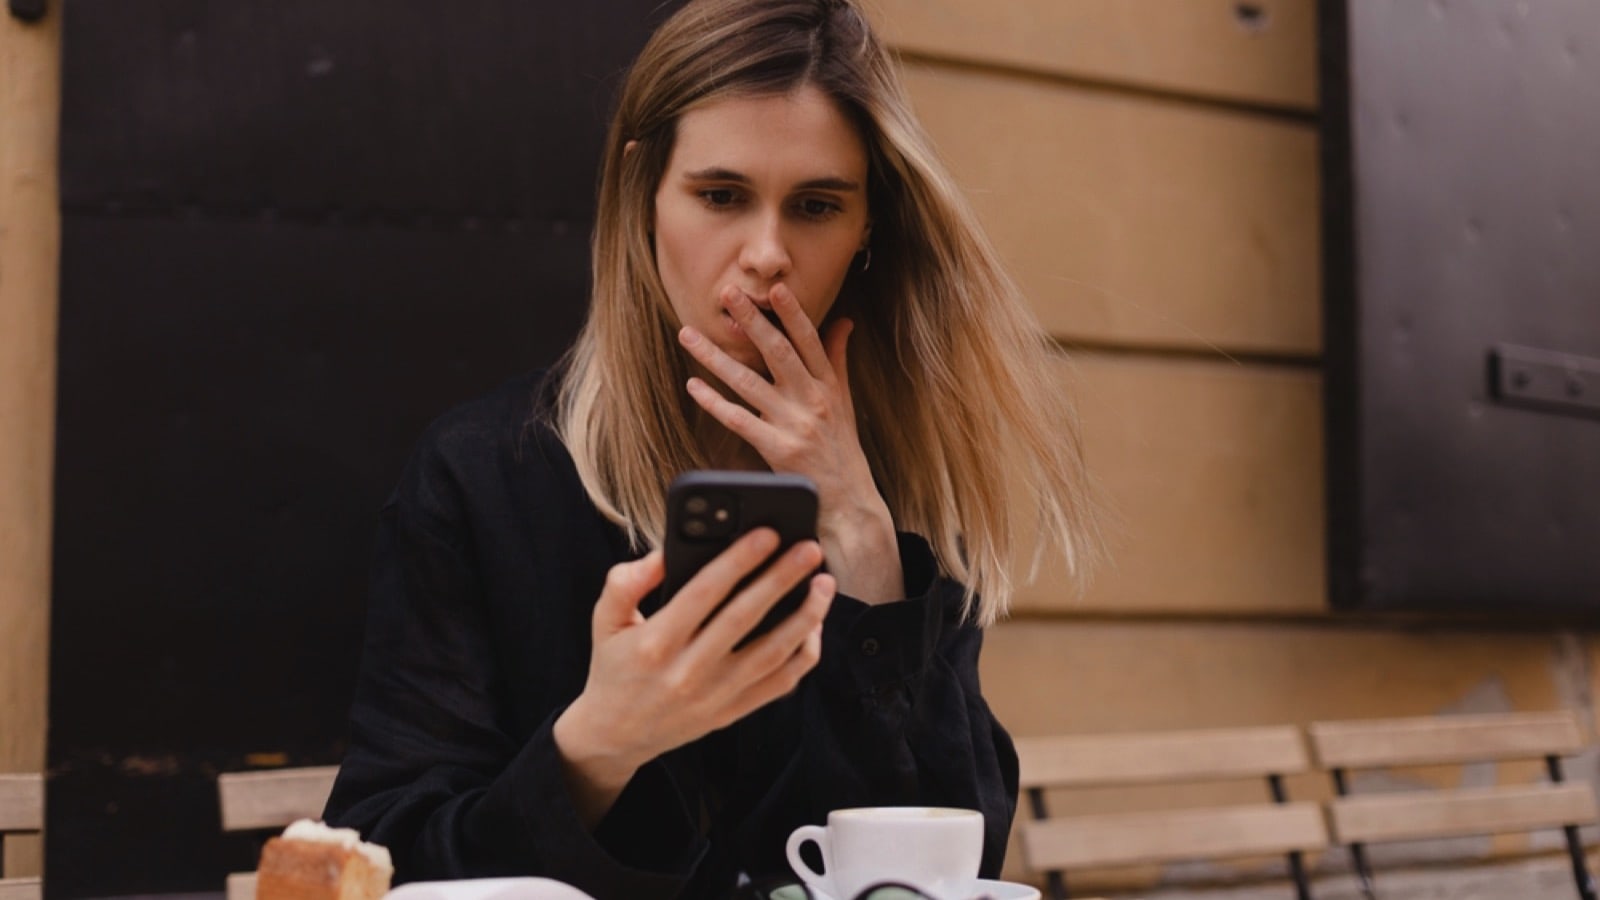 Woman shocked seeing mobile